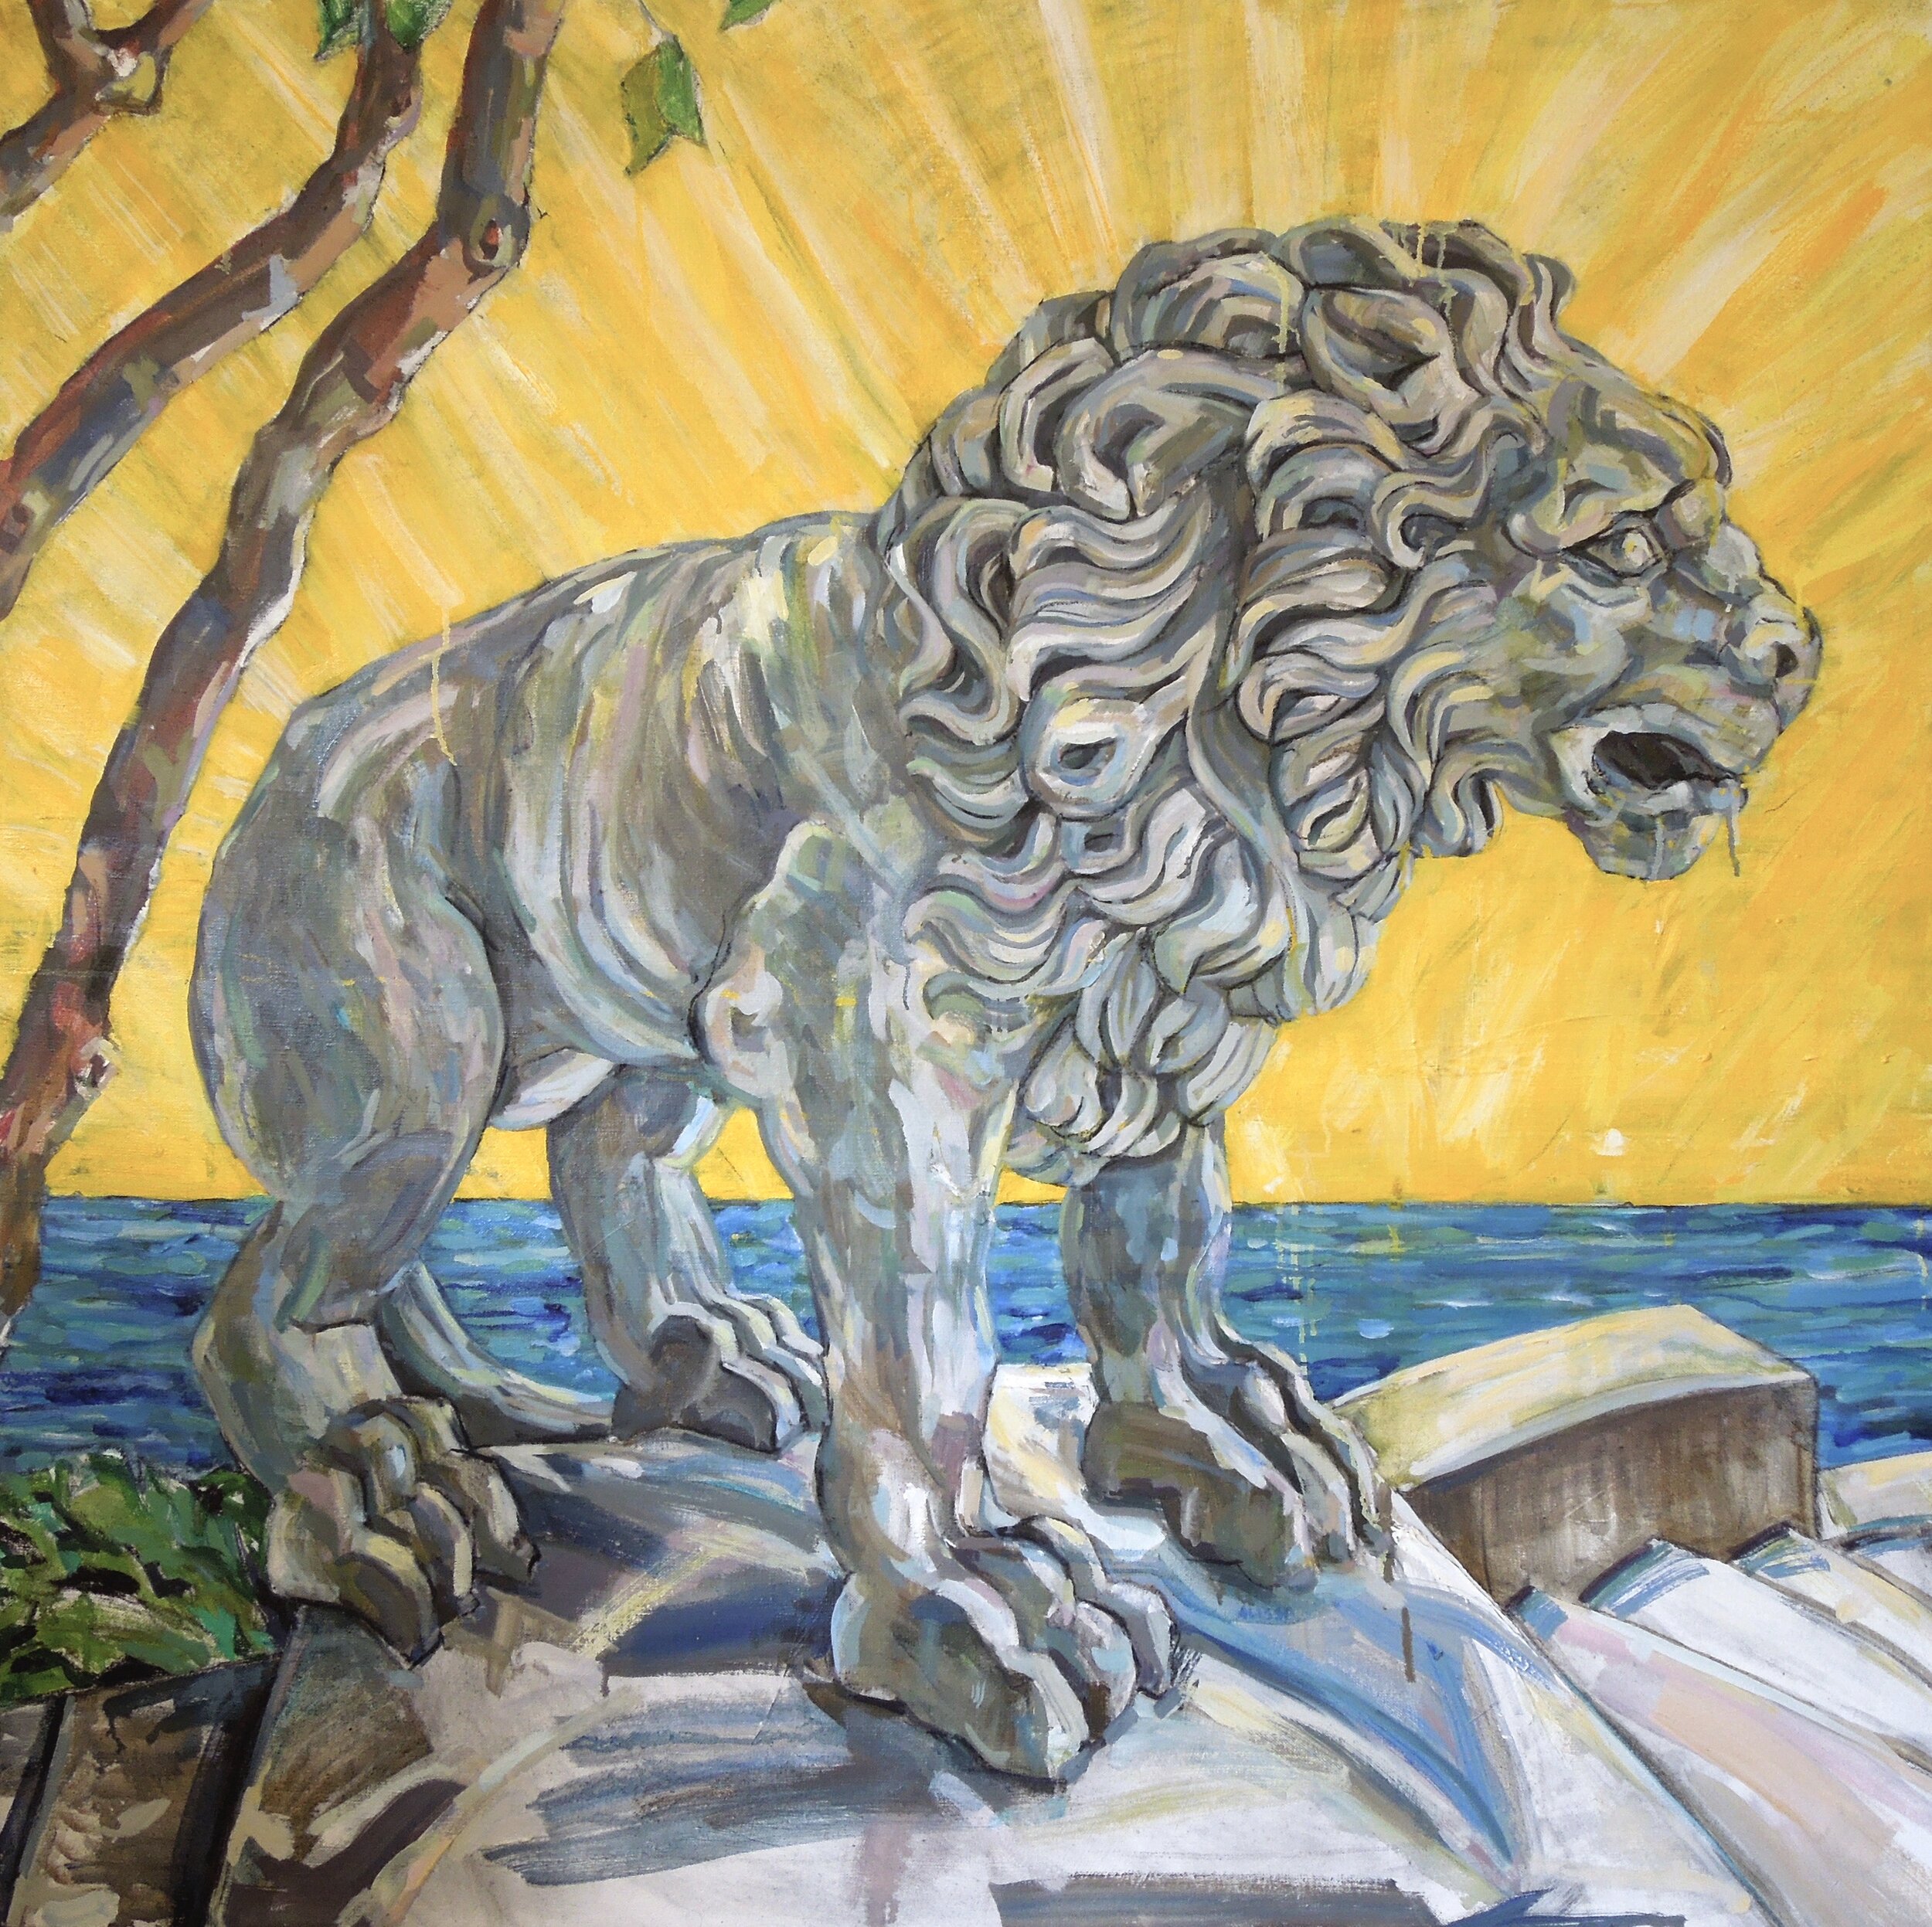 Sun Lion